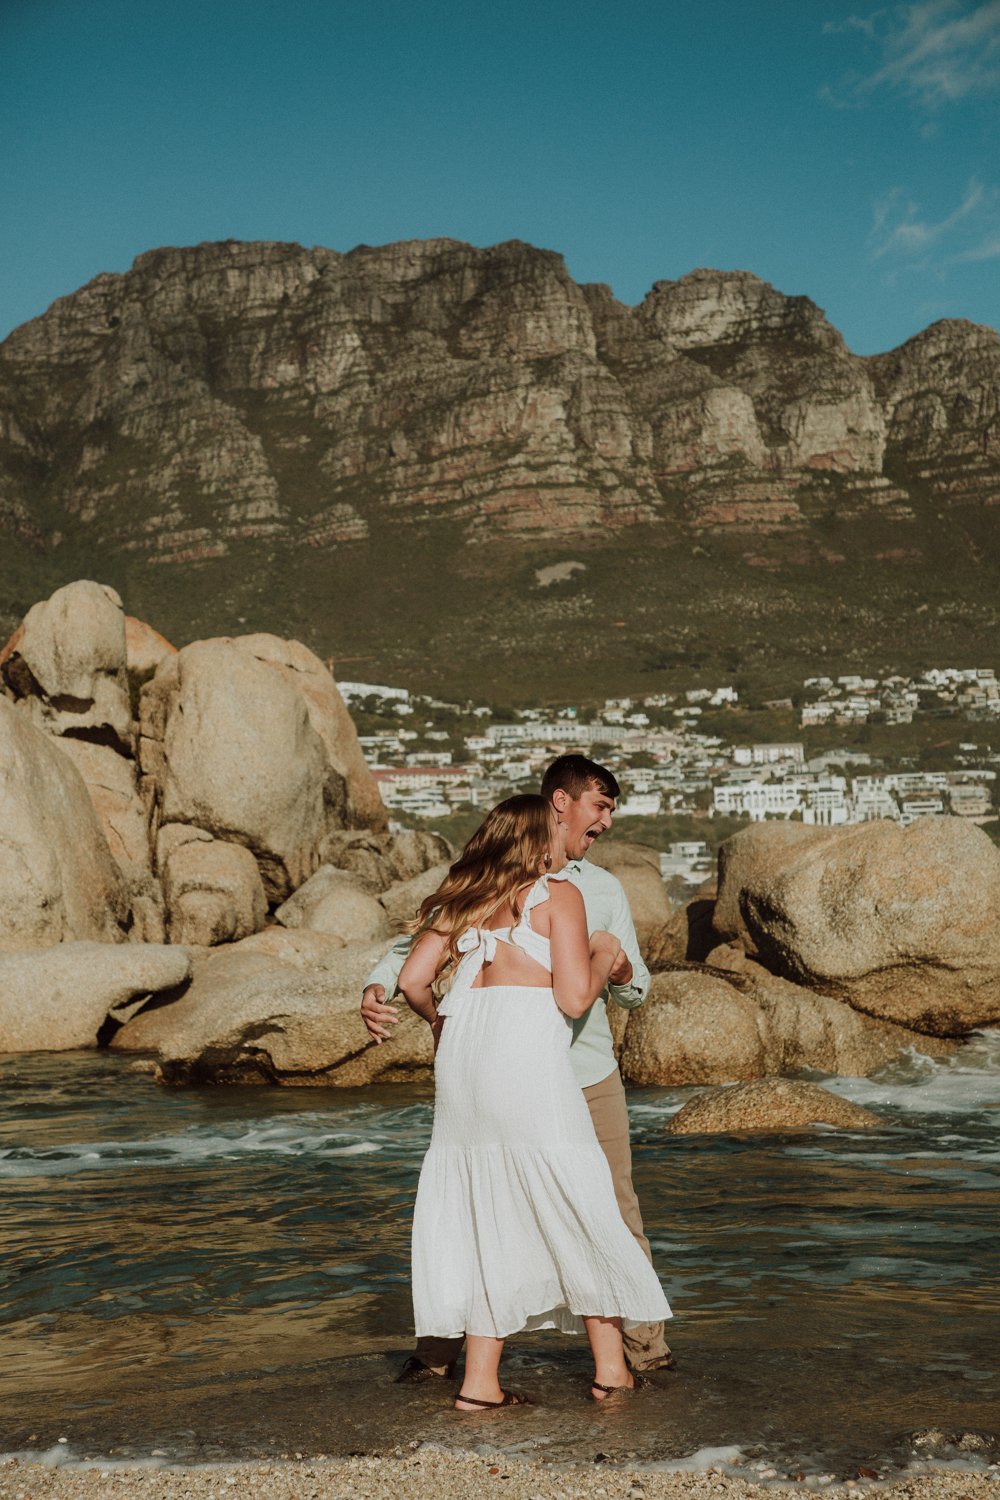 Destination Engagement Photoshoot Cape Town - Bianca Asher Photography-4.jpg